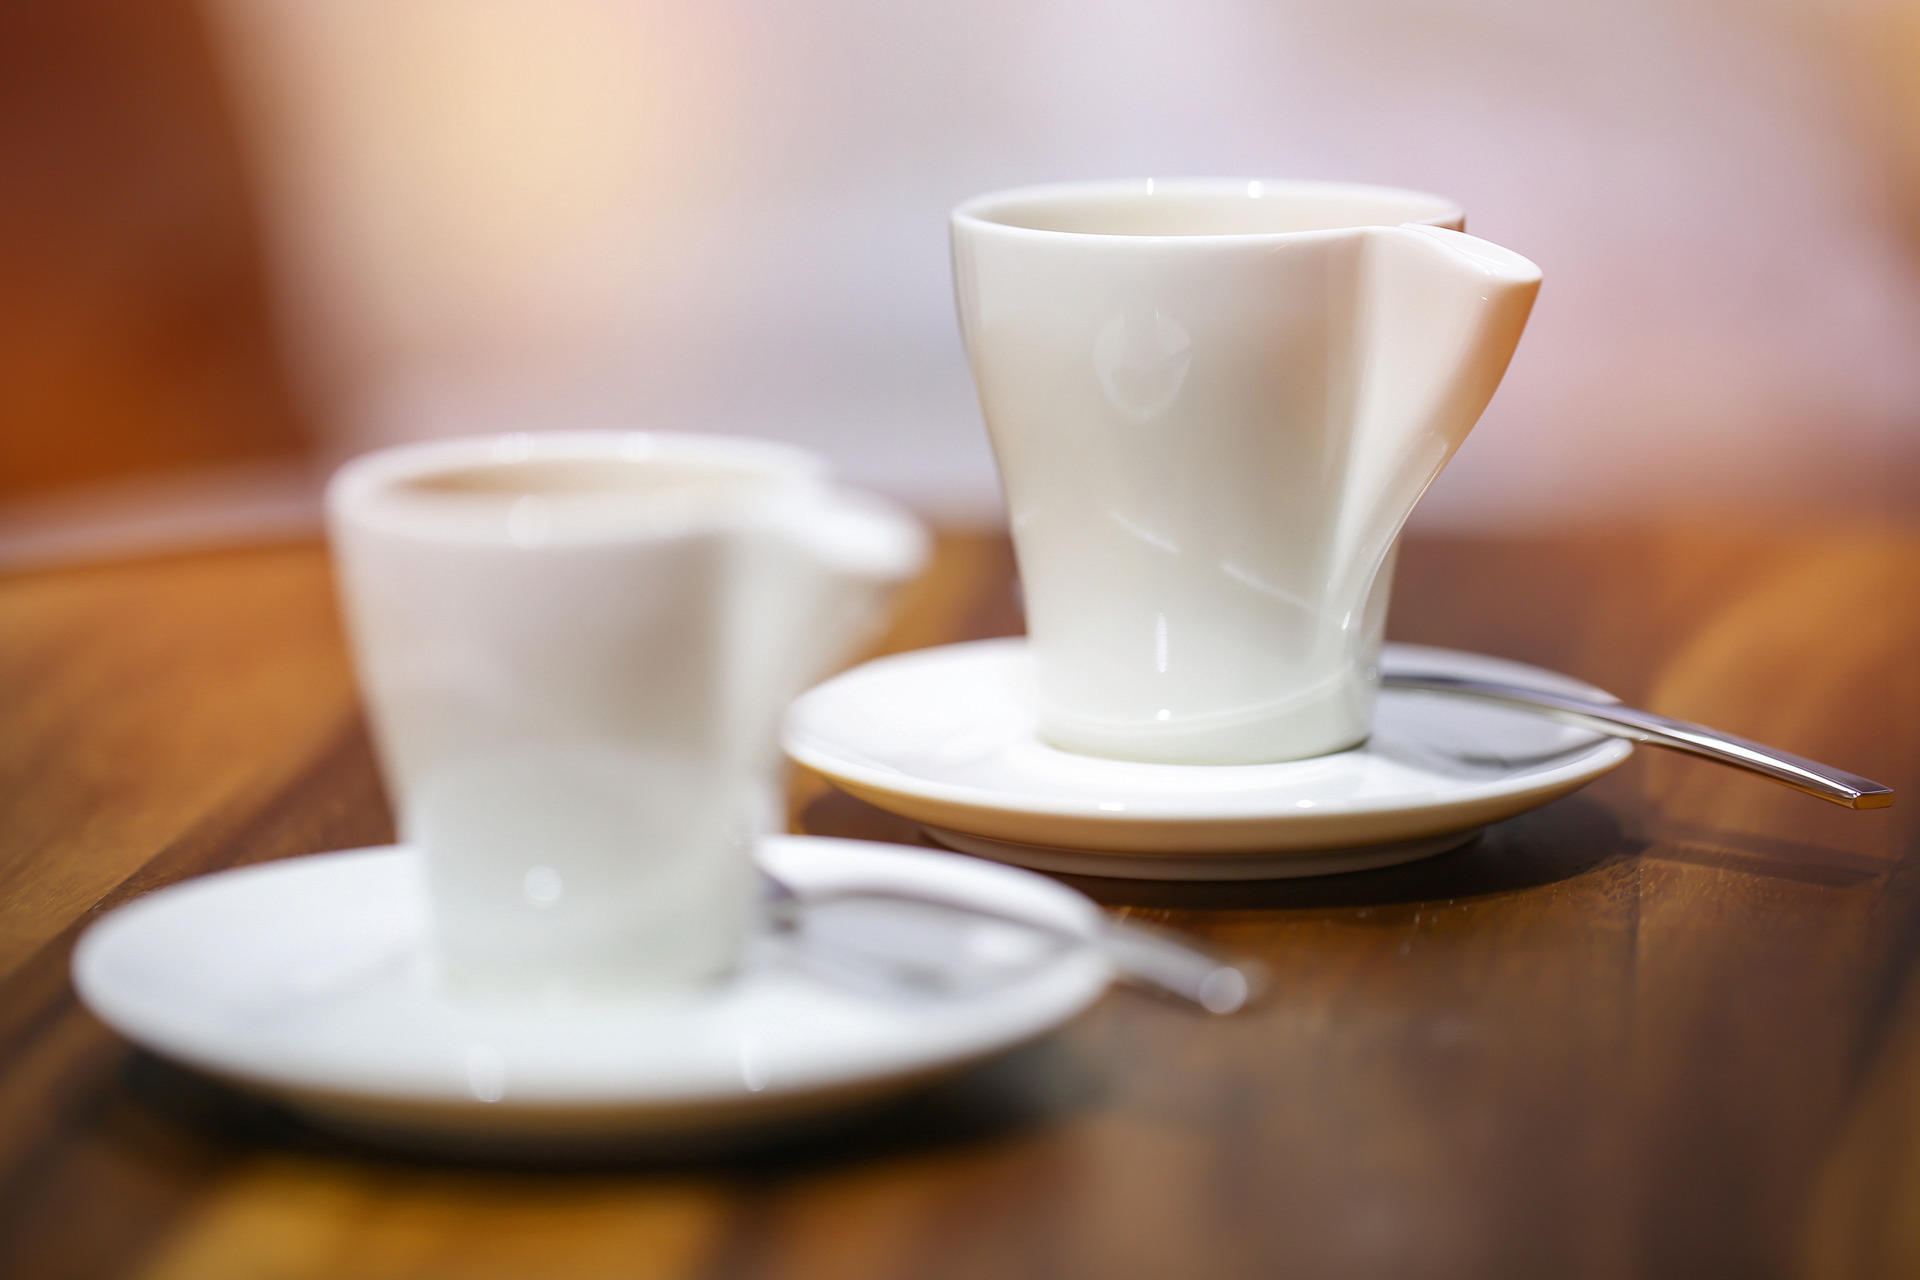 Kaffeetasse mit massivem Henkel swirls 0,15 l plain-white